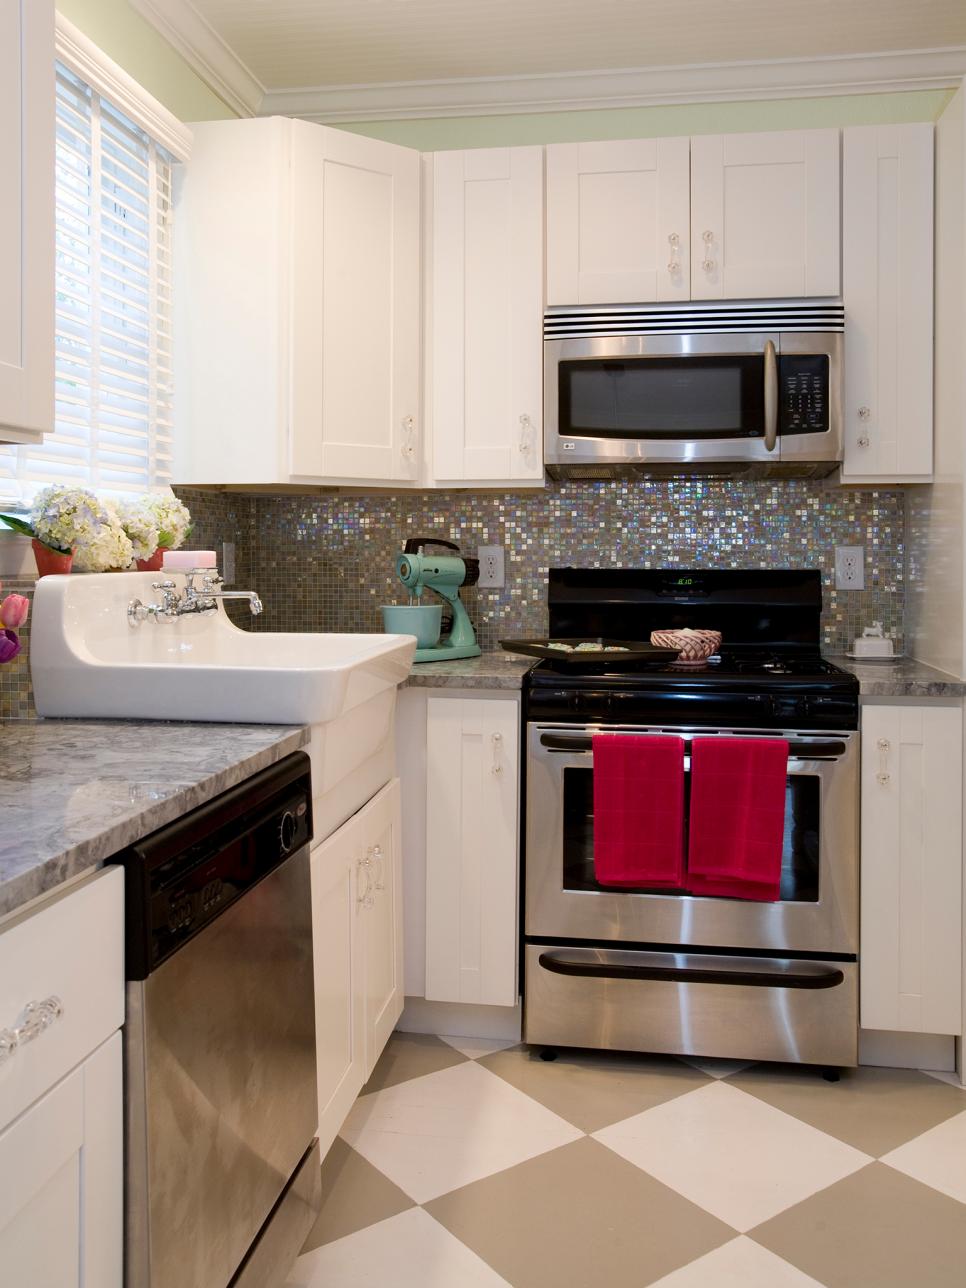 Neutral Kitchen With White Cabinetry, Sparkling Backsplash, Apron Sink